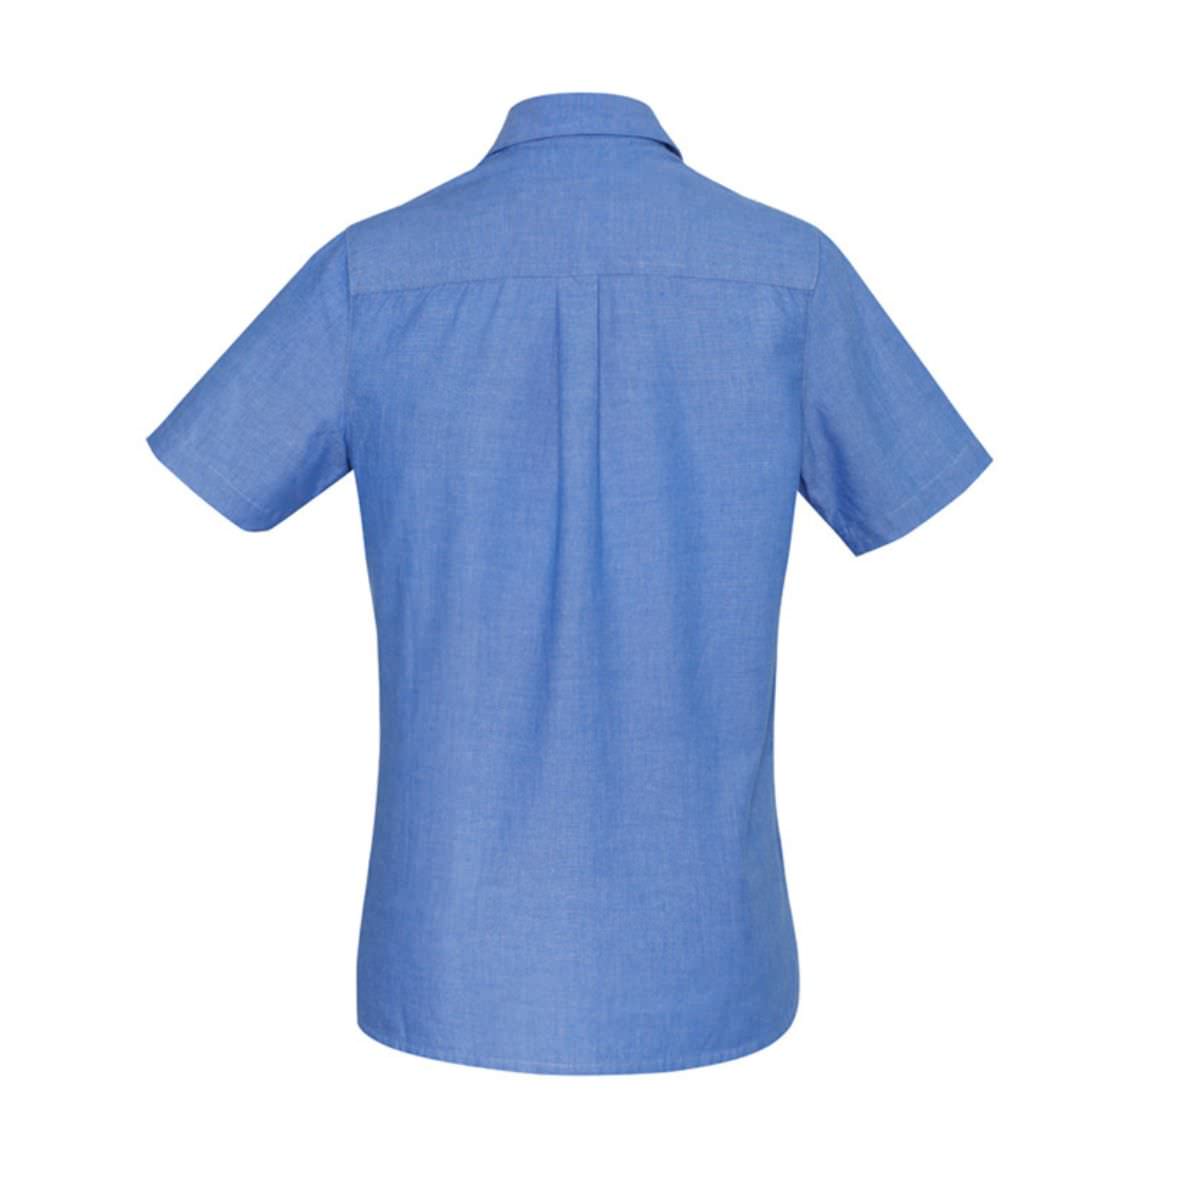 Women's Chambray Short Sleeve Shirt LB6200